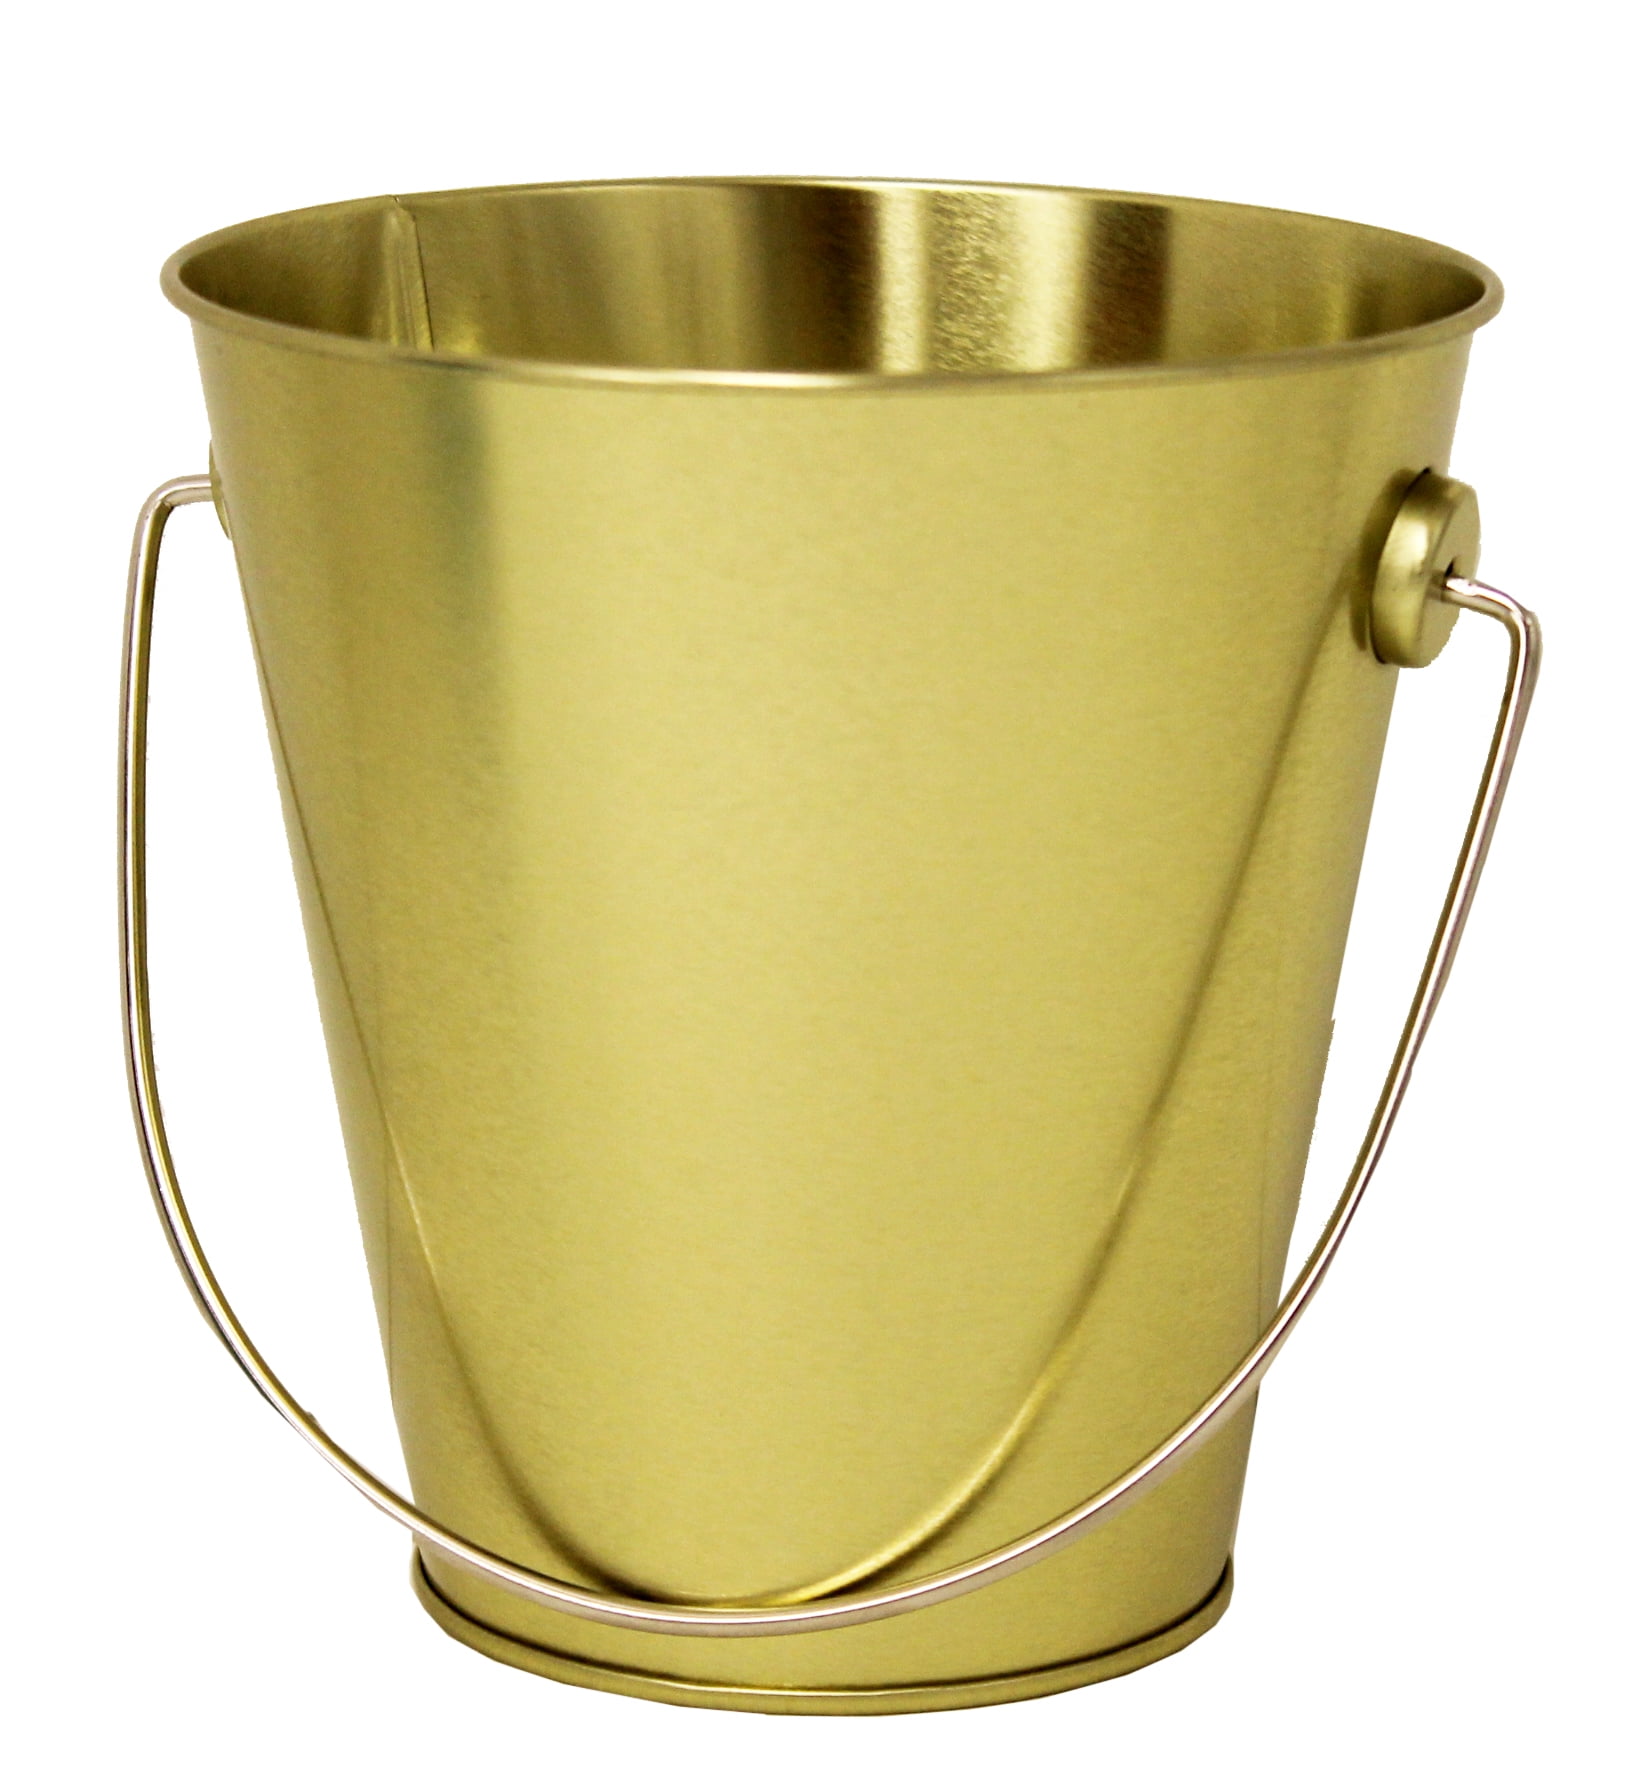 60 Gold Mini Lanterns, DIY, Pick Your Color, Wedding Favors